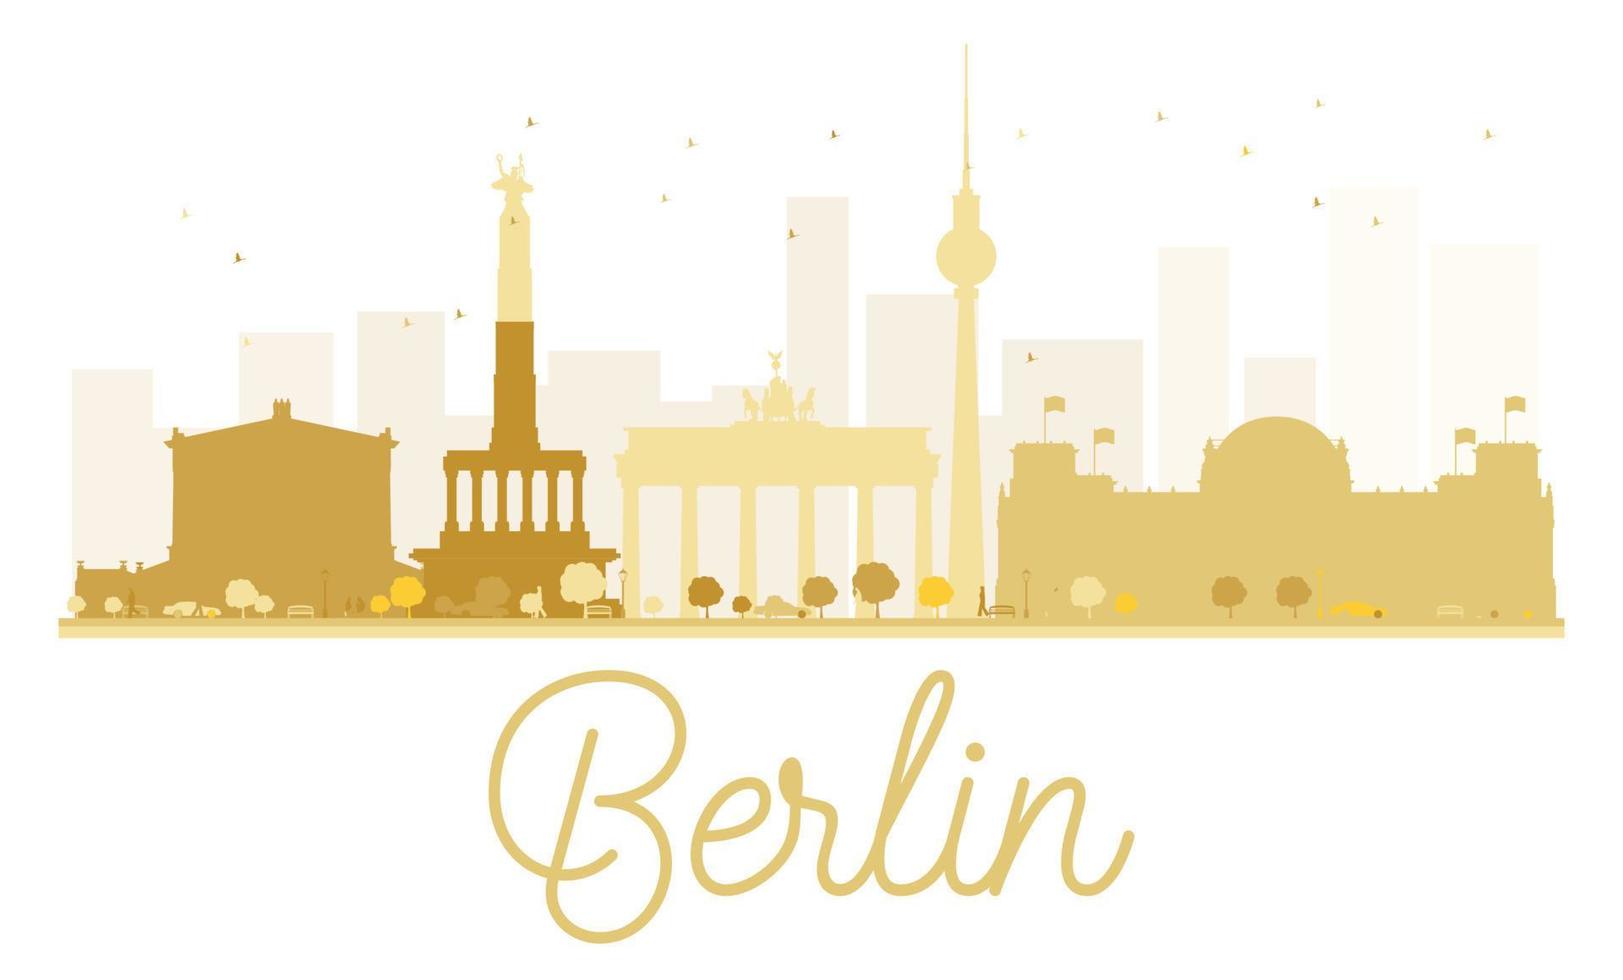 Berlin City skyline golden silhouette. vector